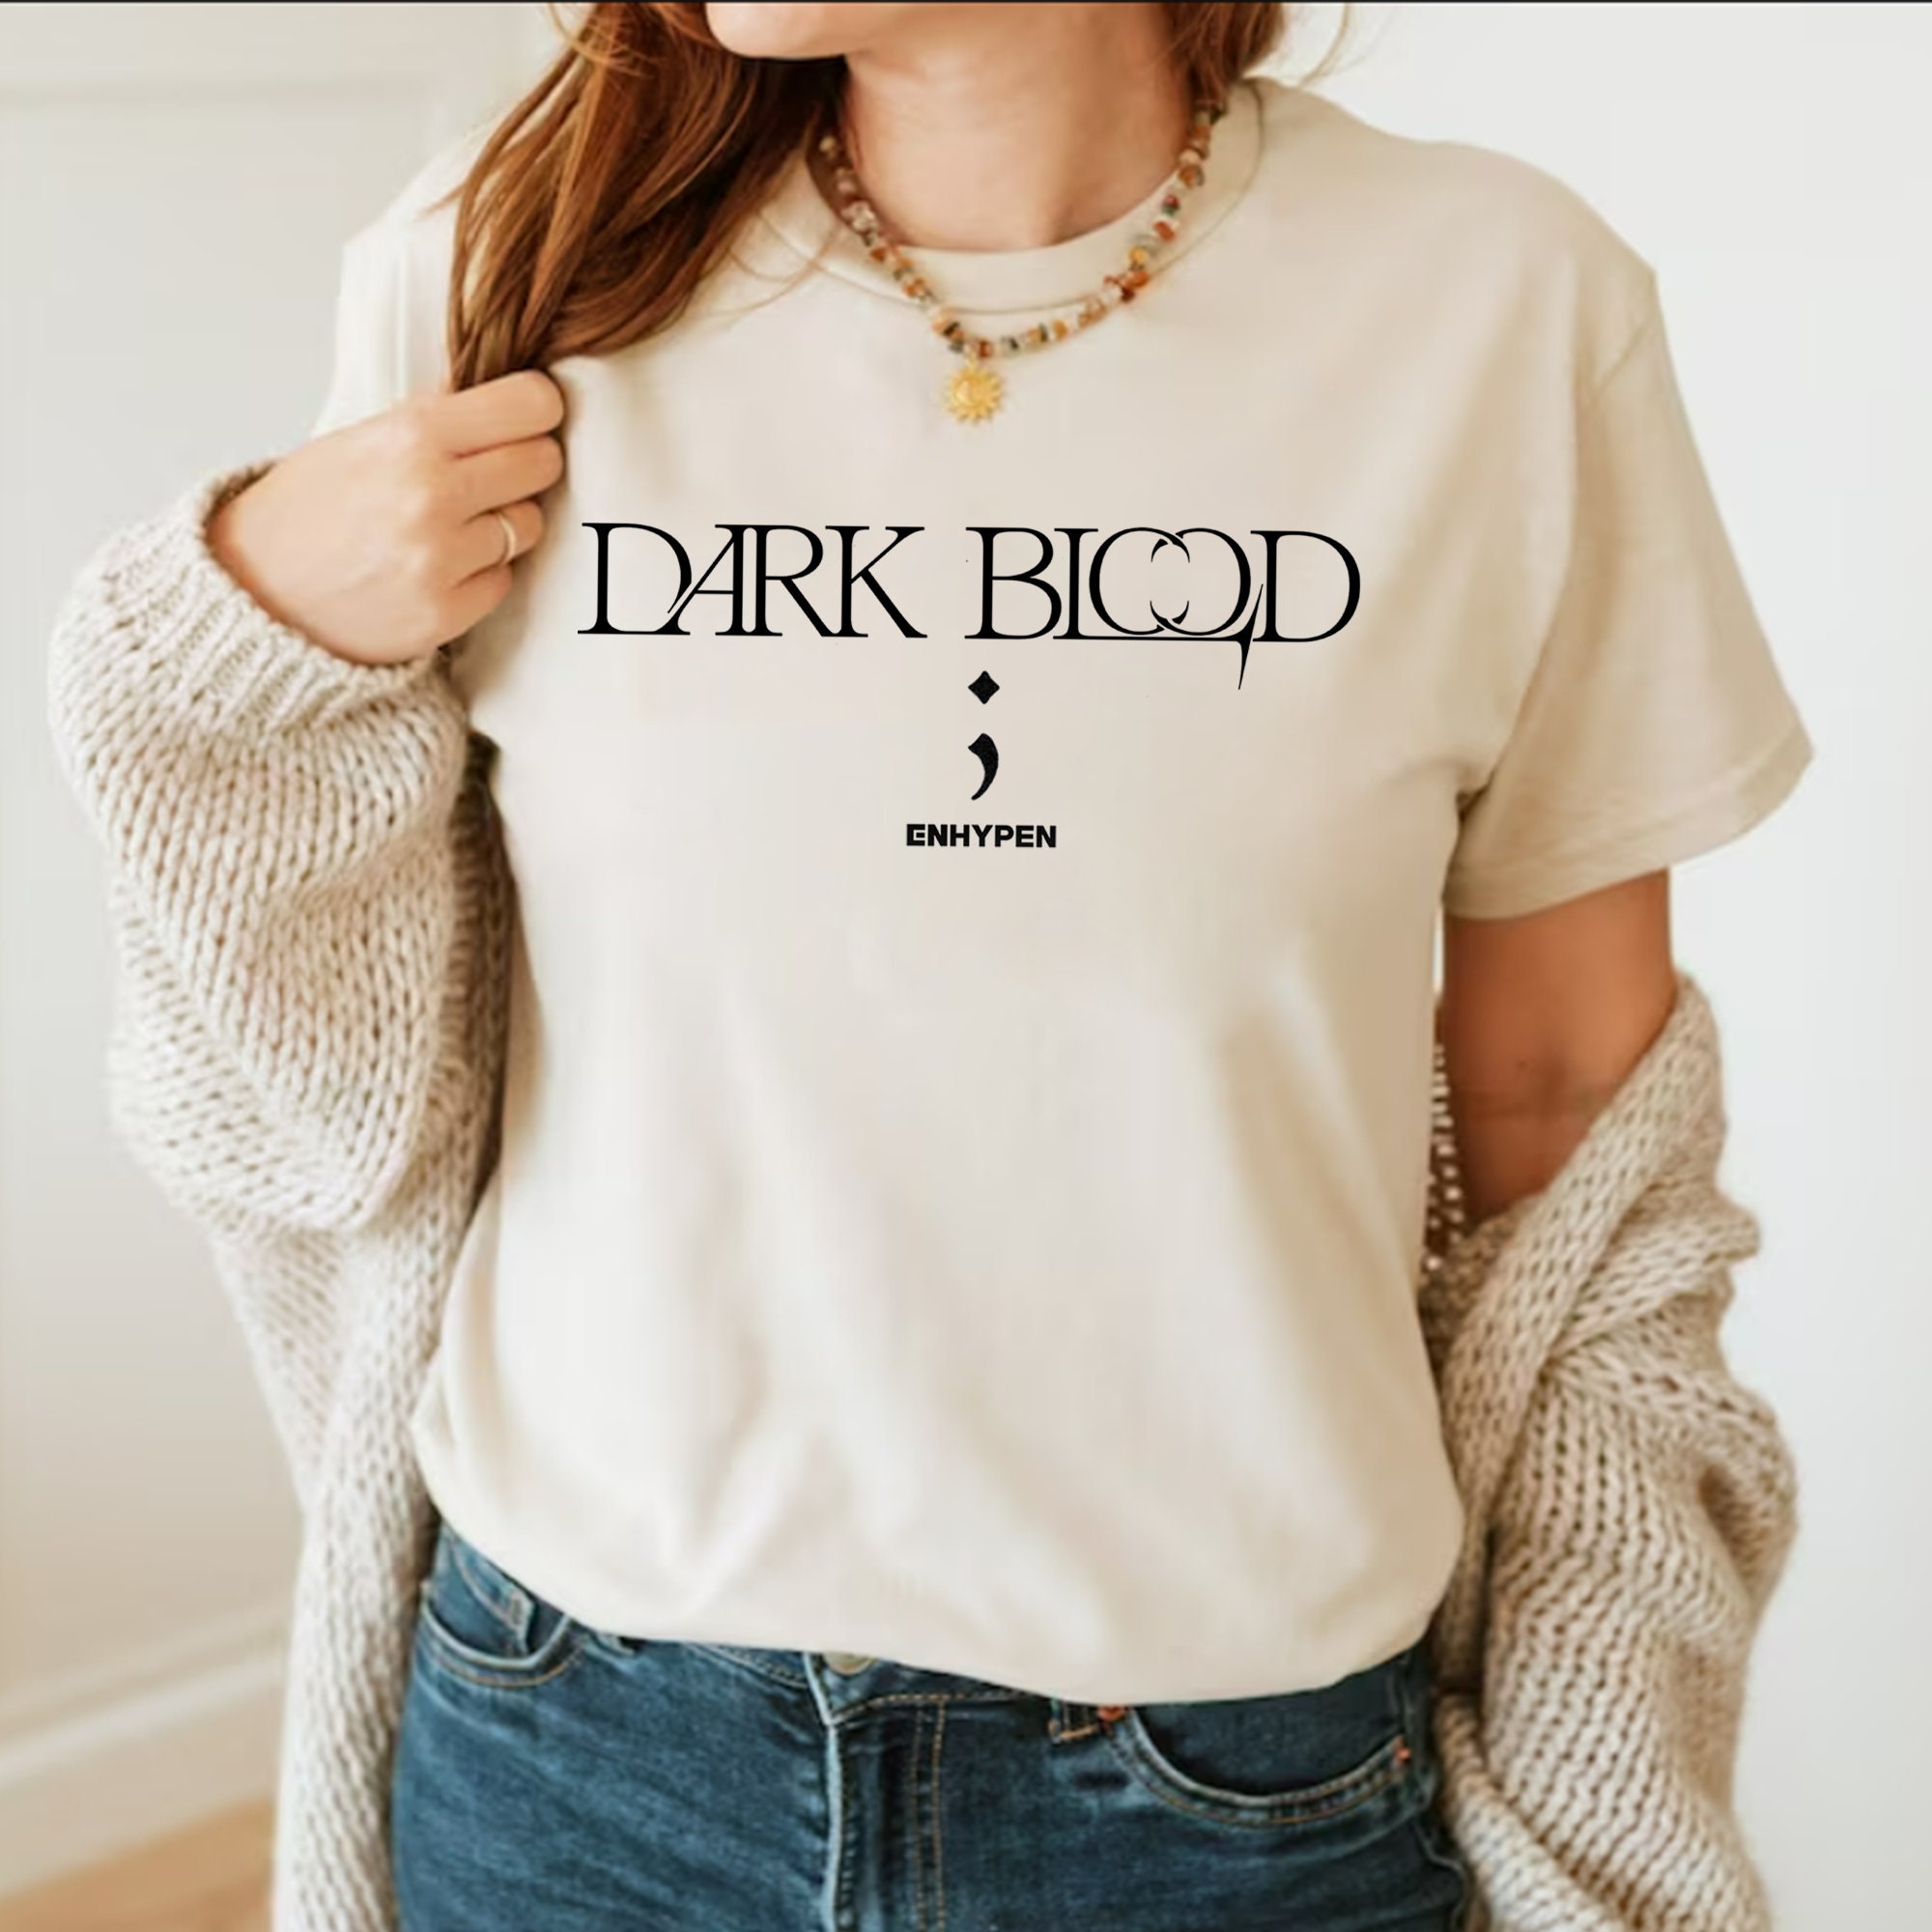 Dark Blood Enhypen Tracklist Sweatshirt, Bite Me, - Inspire Uplift